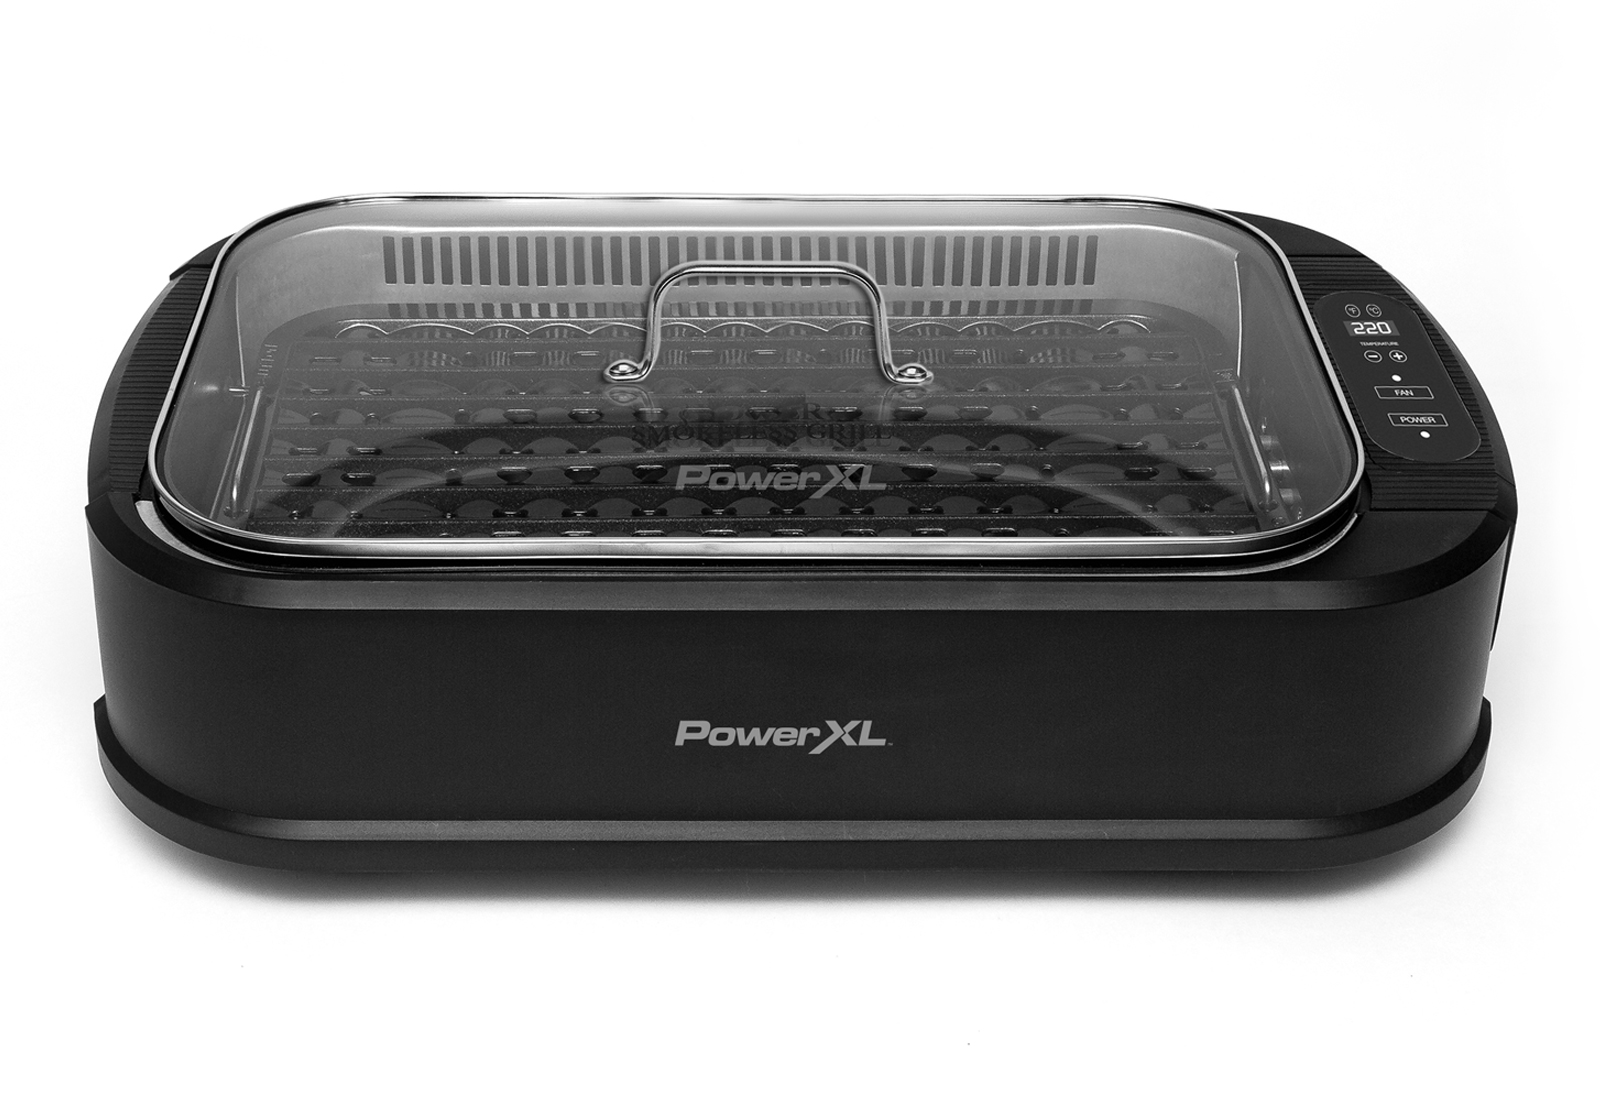 PowerXL Smokeless Grill Family Size Product Image